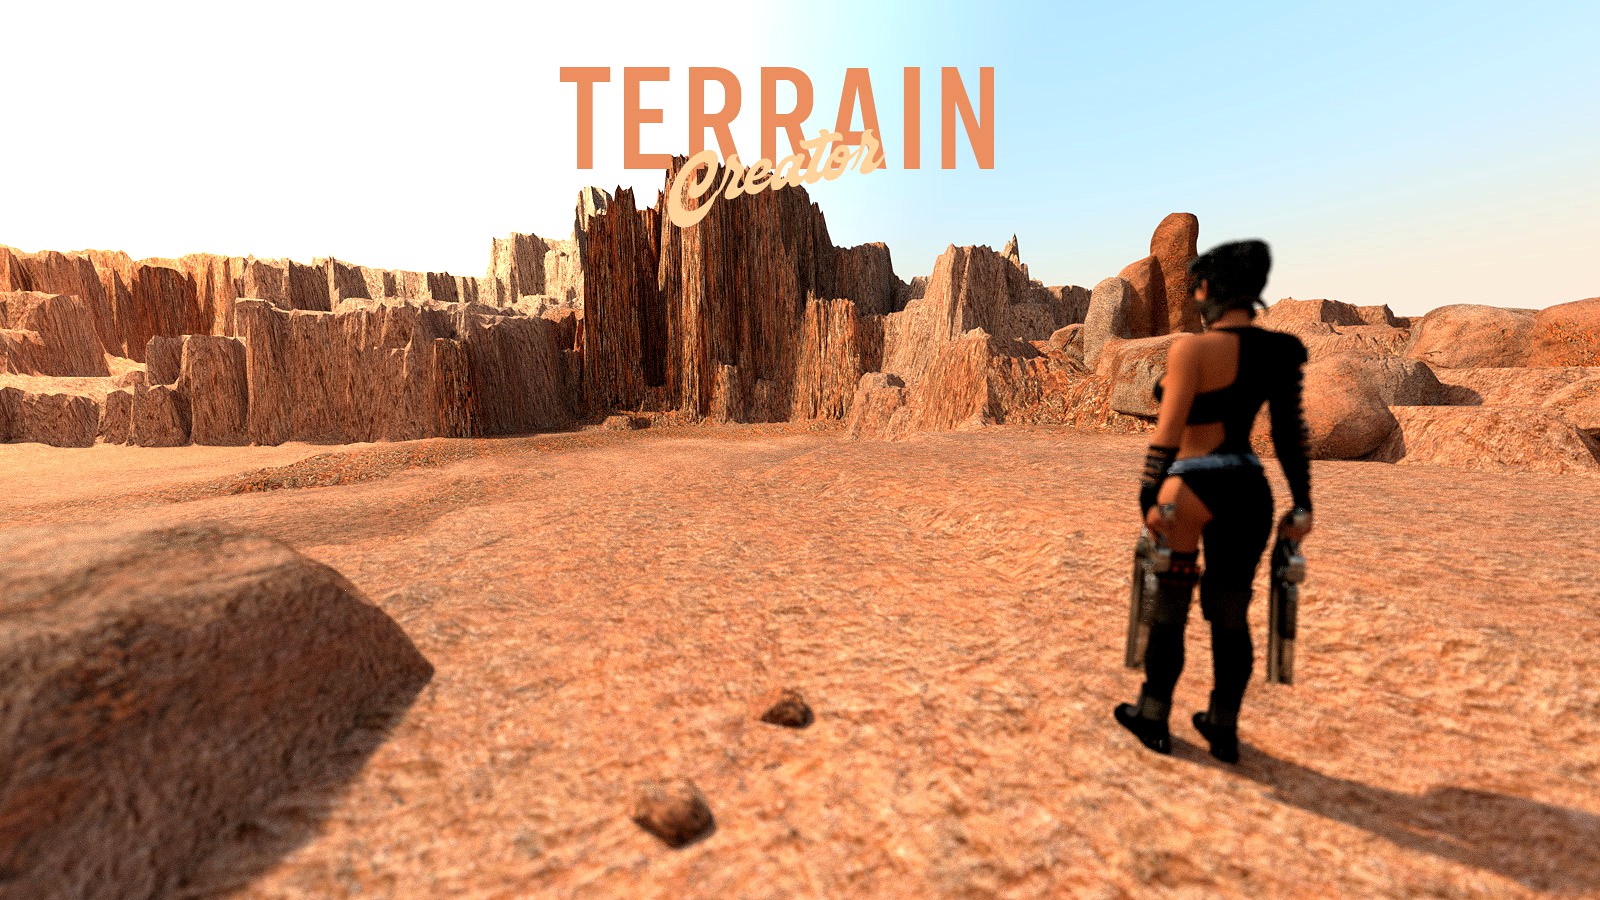 Terrain Creator for DS Iray